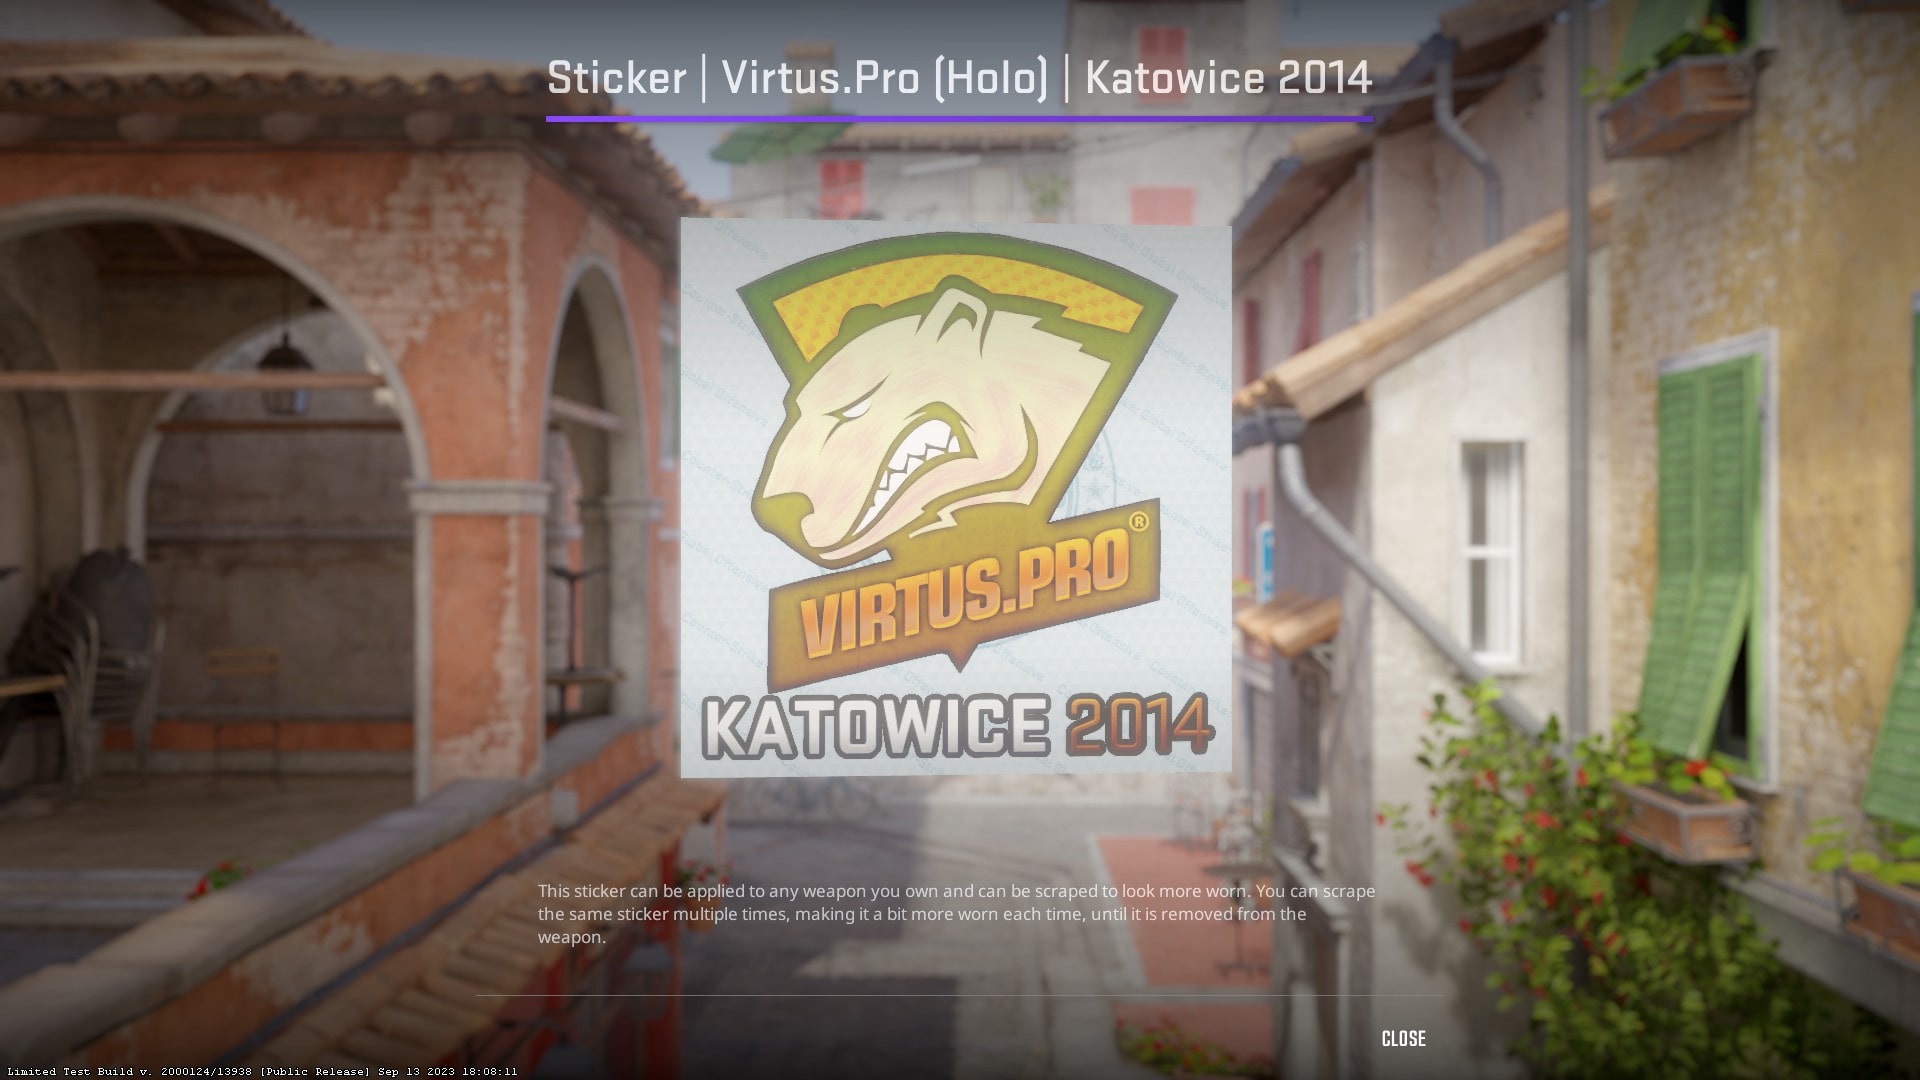 Sticker Virtus.Pro (Holo) Katowice 2014 Current Price